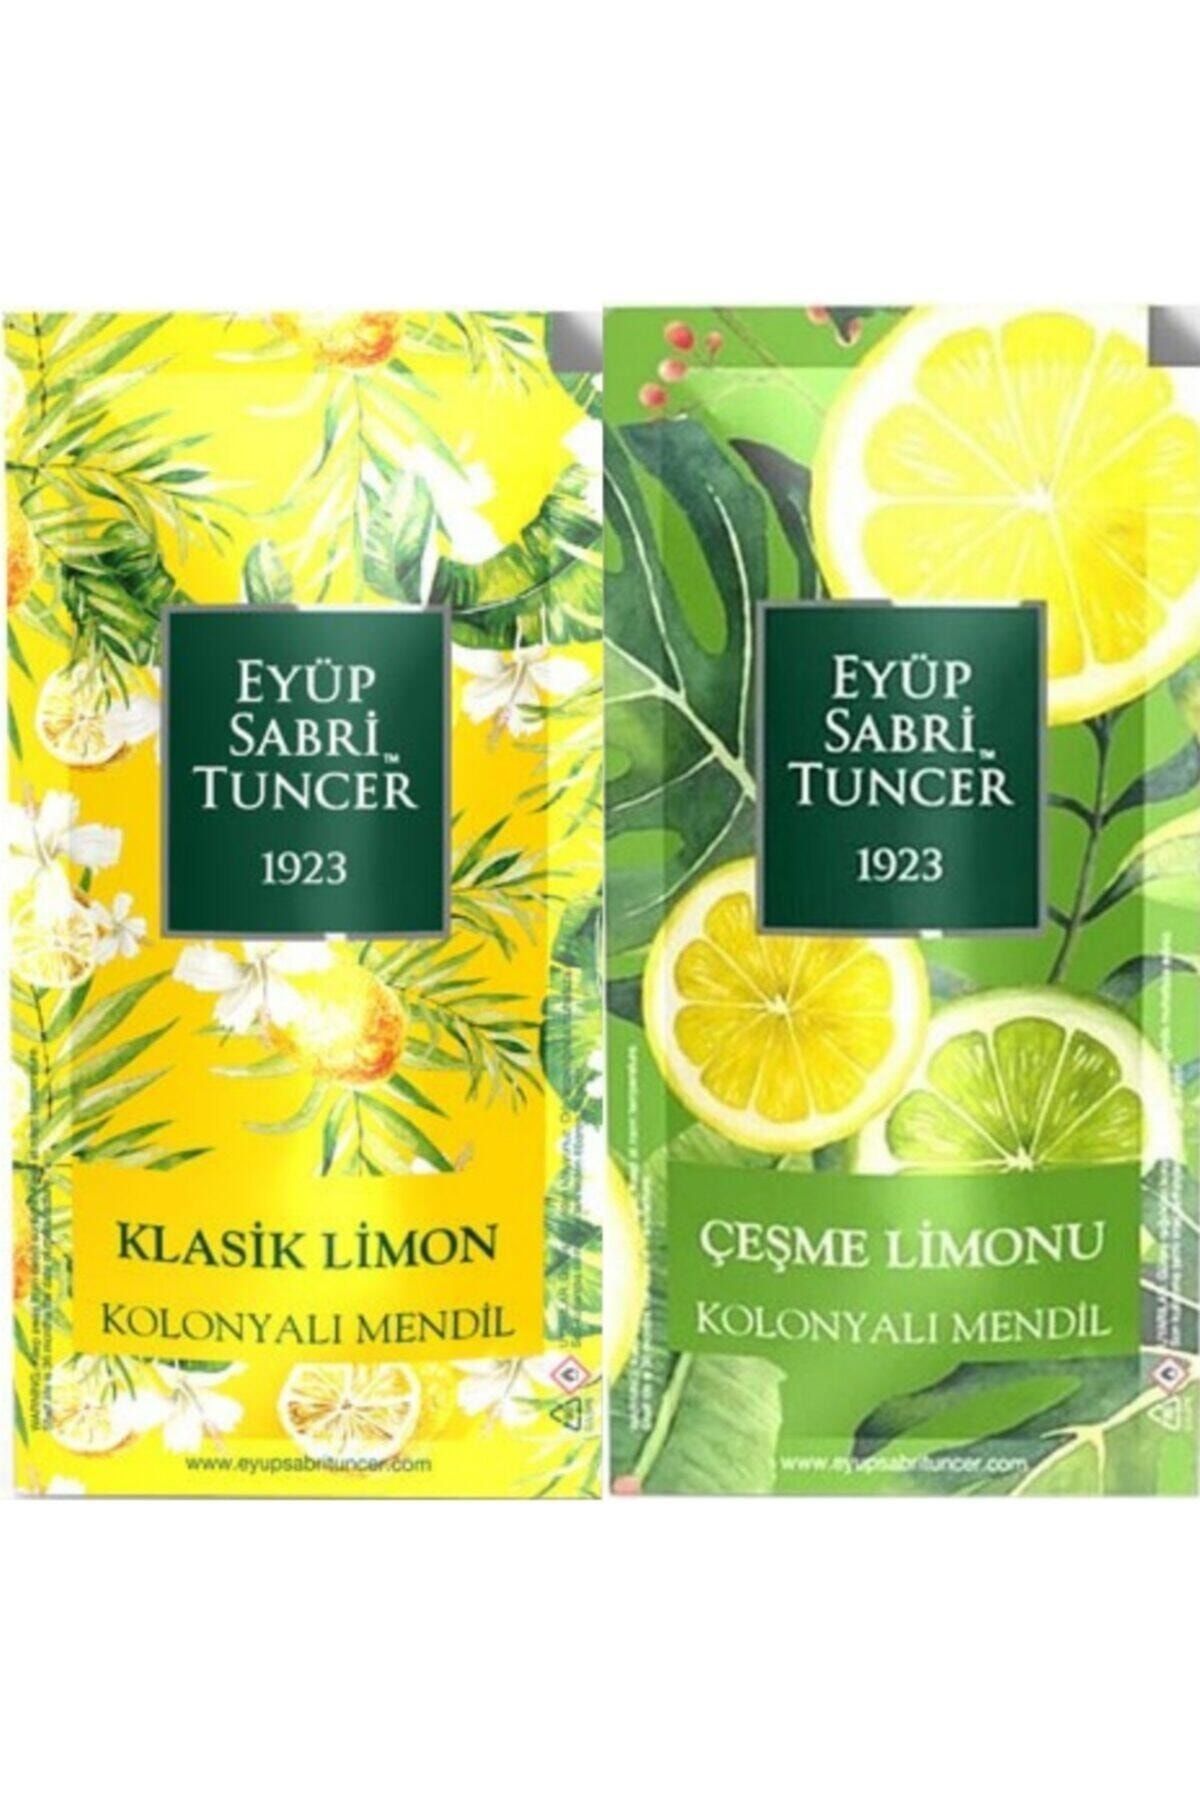 Eyüp Sabri Tuncer Est Klasik Limon Ve Çeşme Limonu 300 Adet Kolonyalı Mendil 2 Li Set